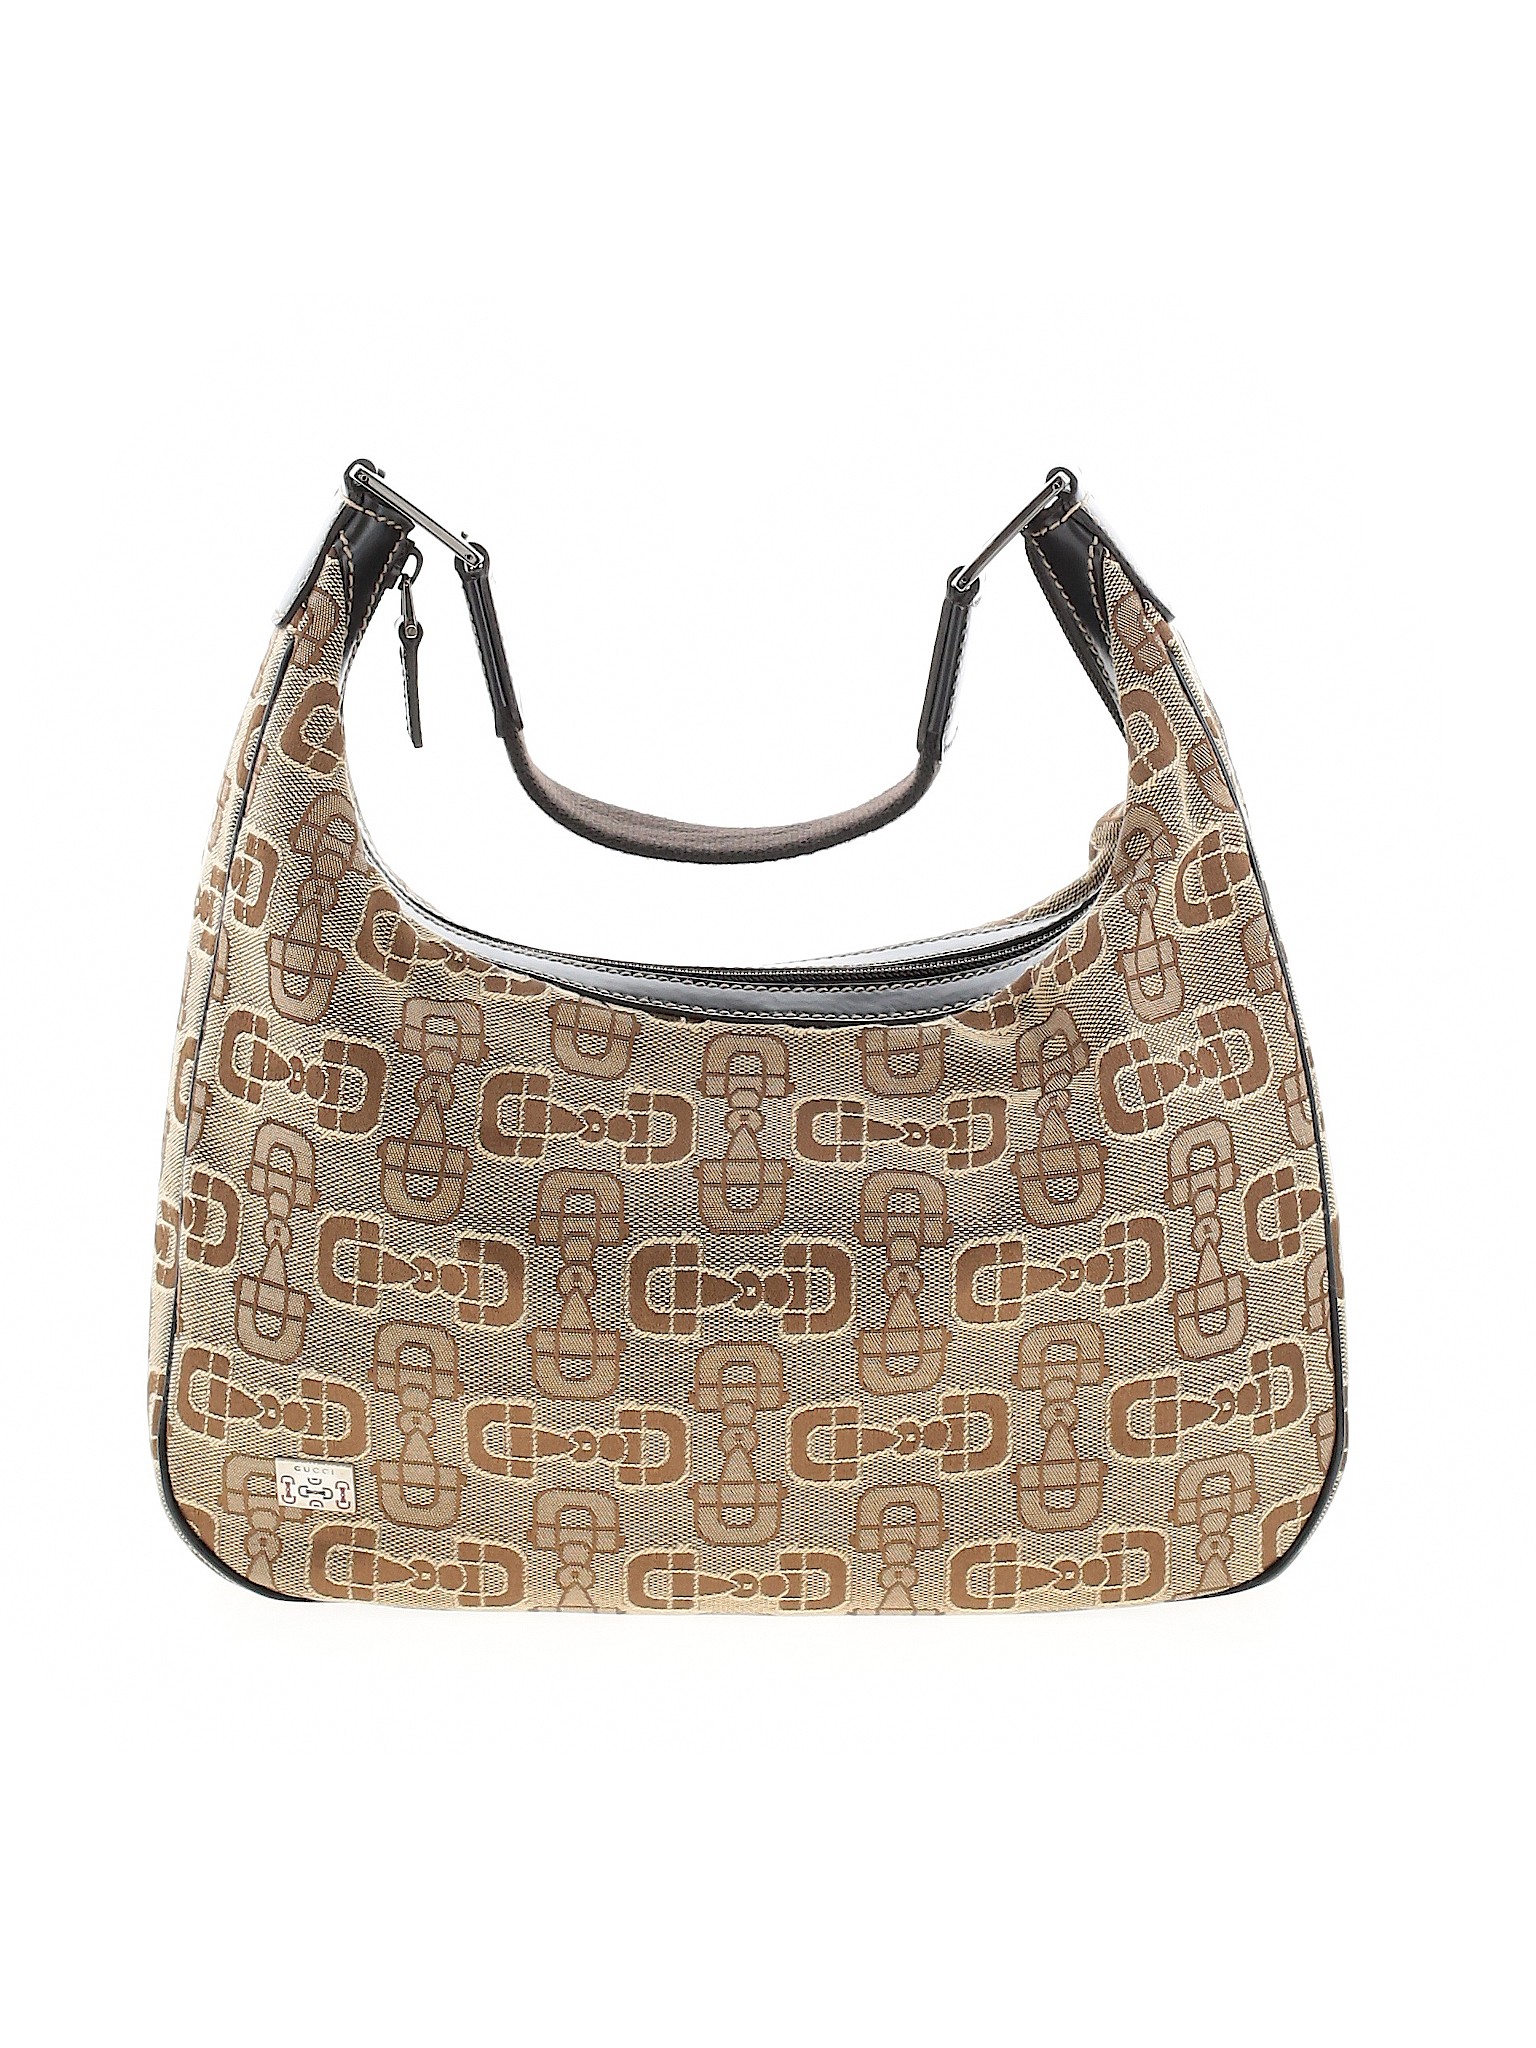 Gucci Women Brown Shoulder Bag One Size | eBay